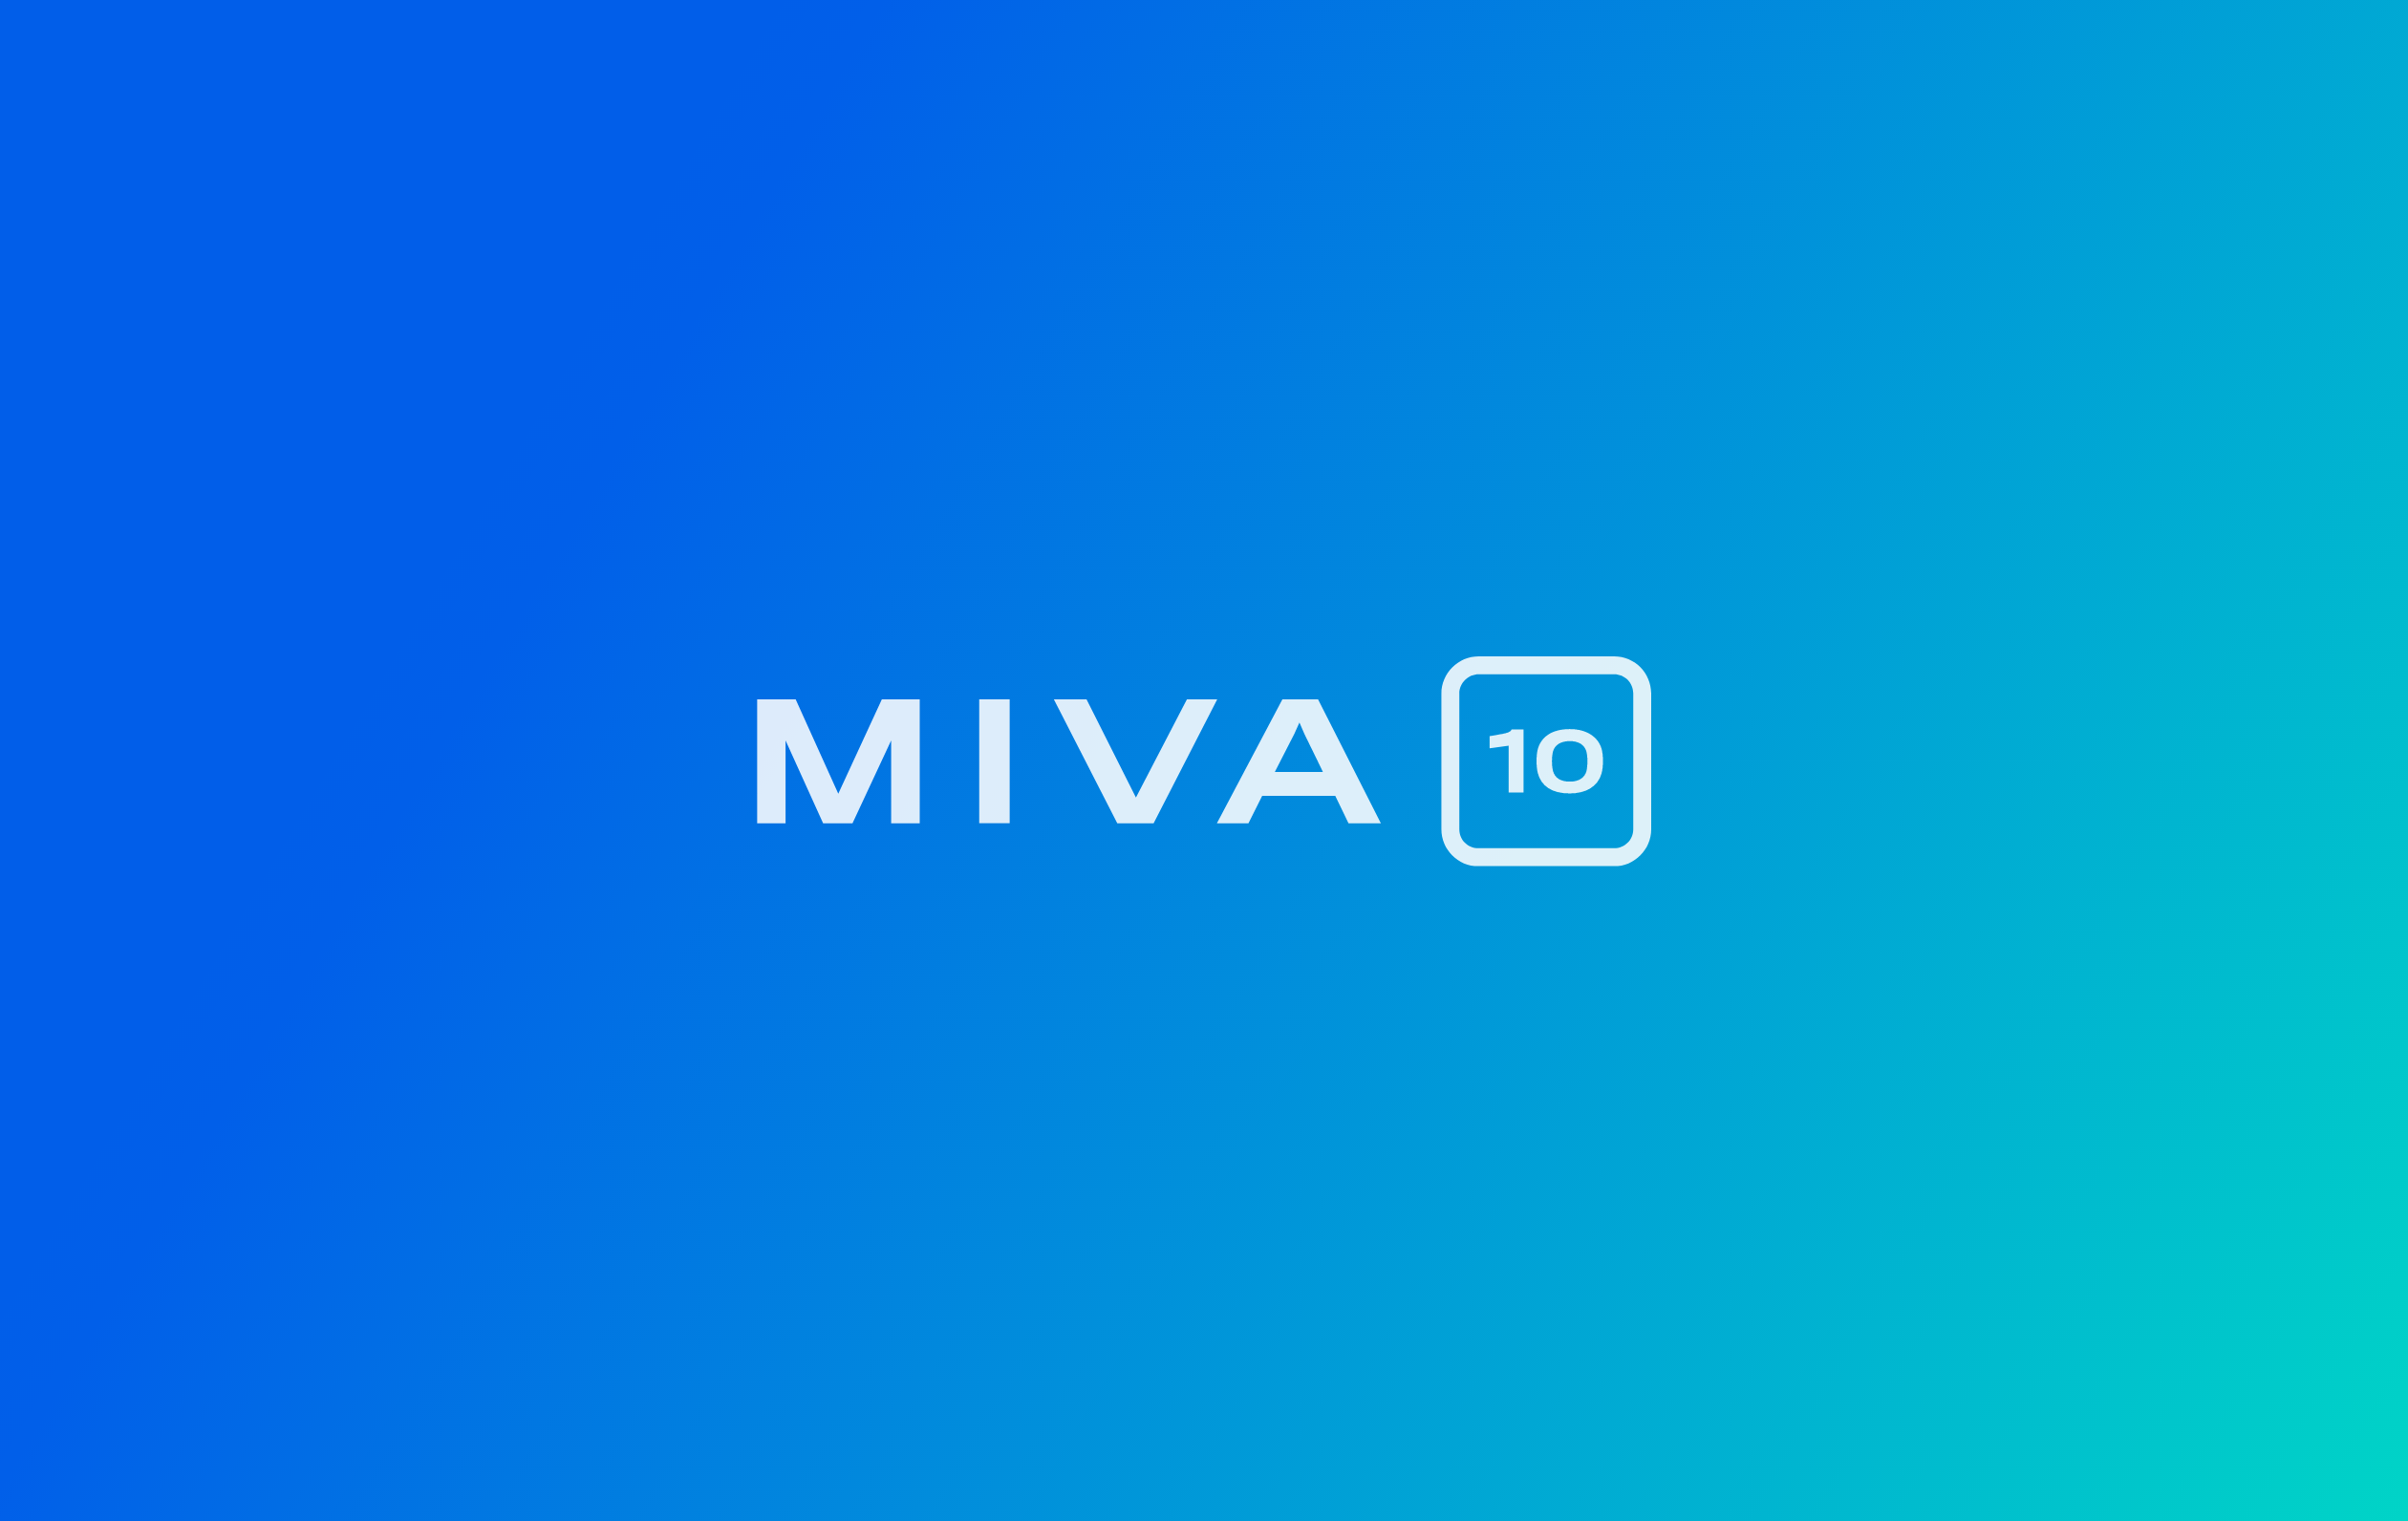 Logo of Miva 10 on a blue background